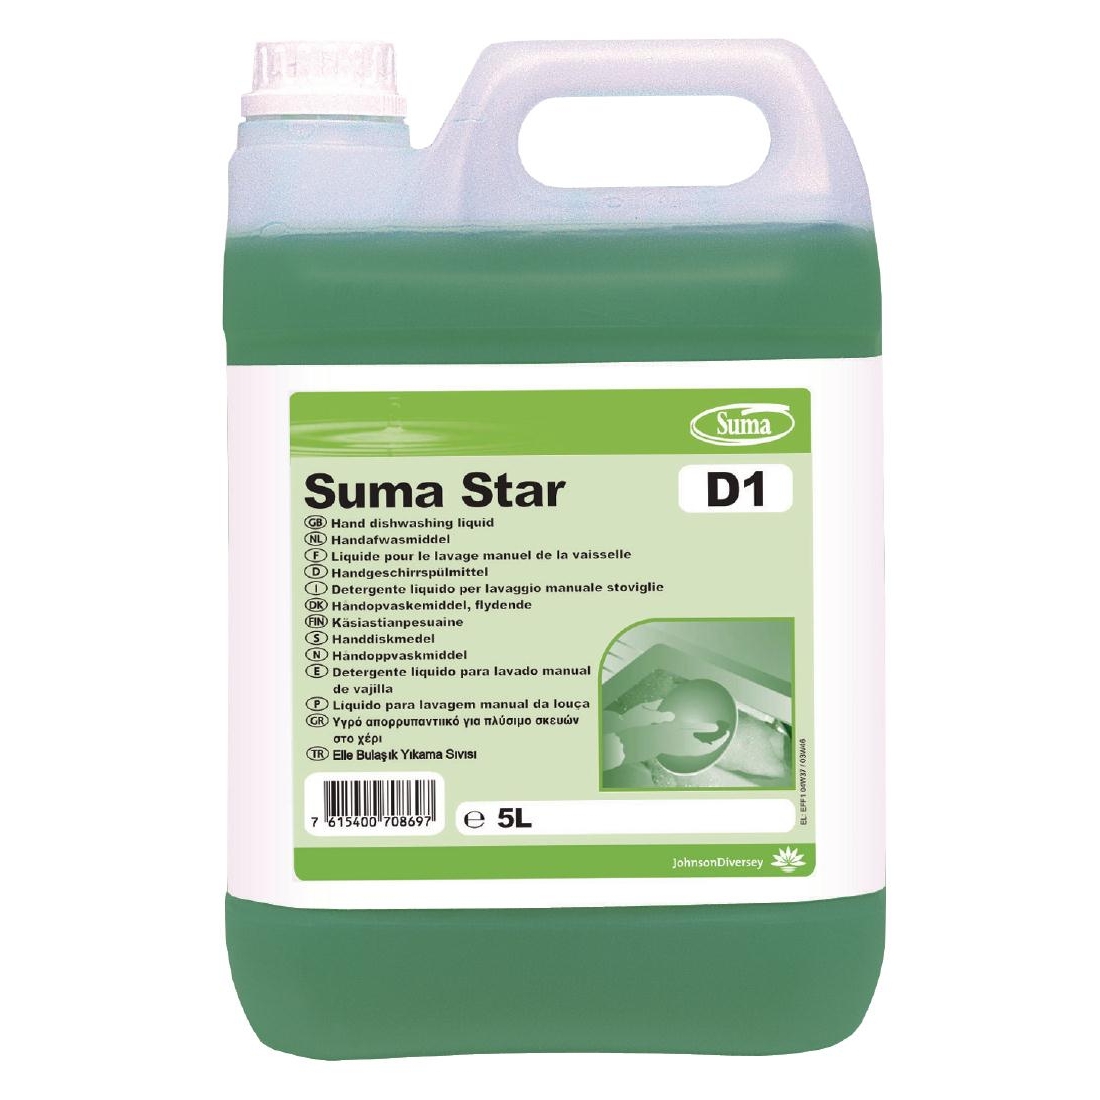 Suma Star D1 Washing Up Liquid 5 Litre (Pack of 2)